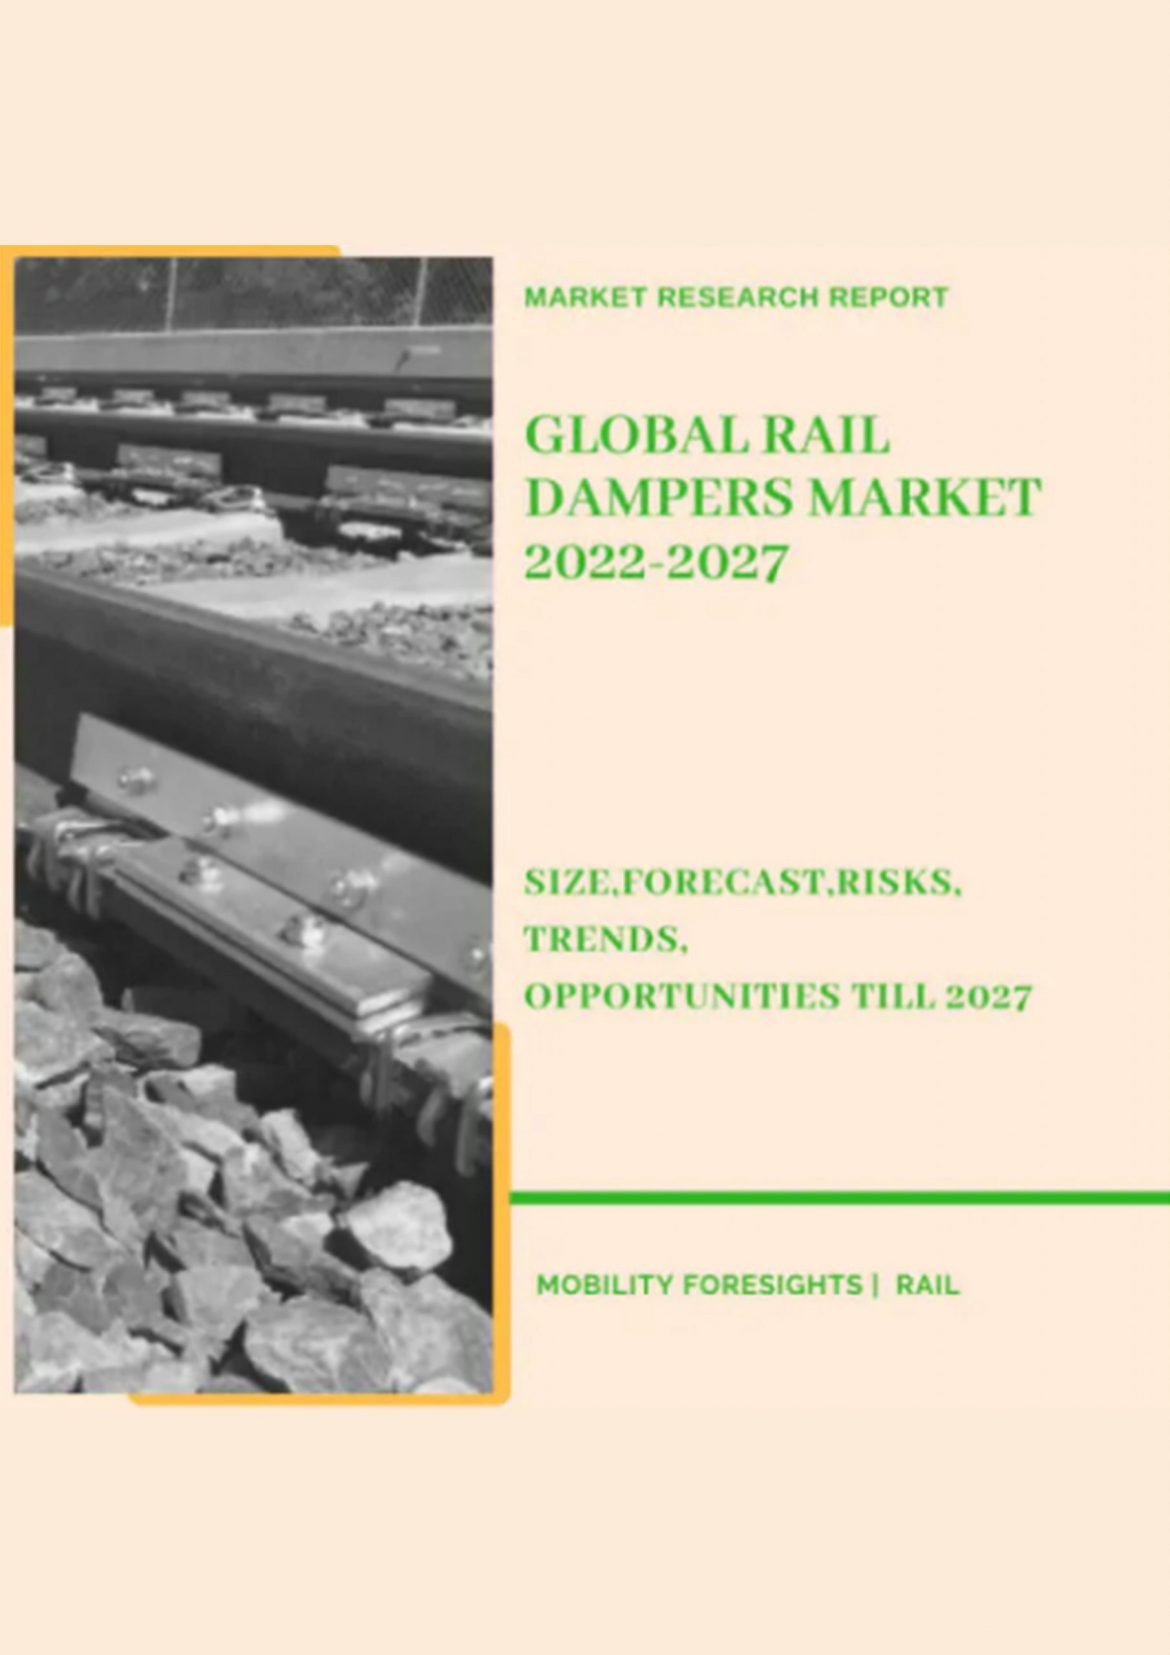 Global Rail Dampers Market 2022-2027